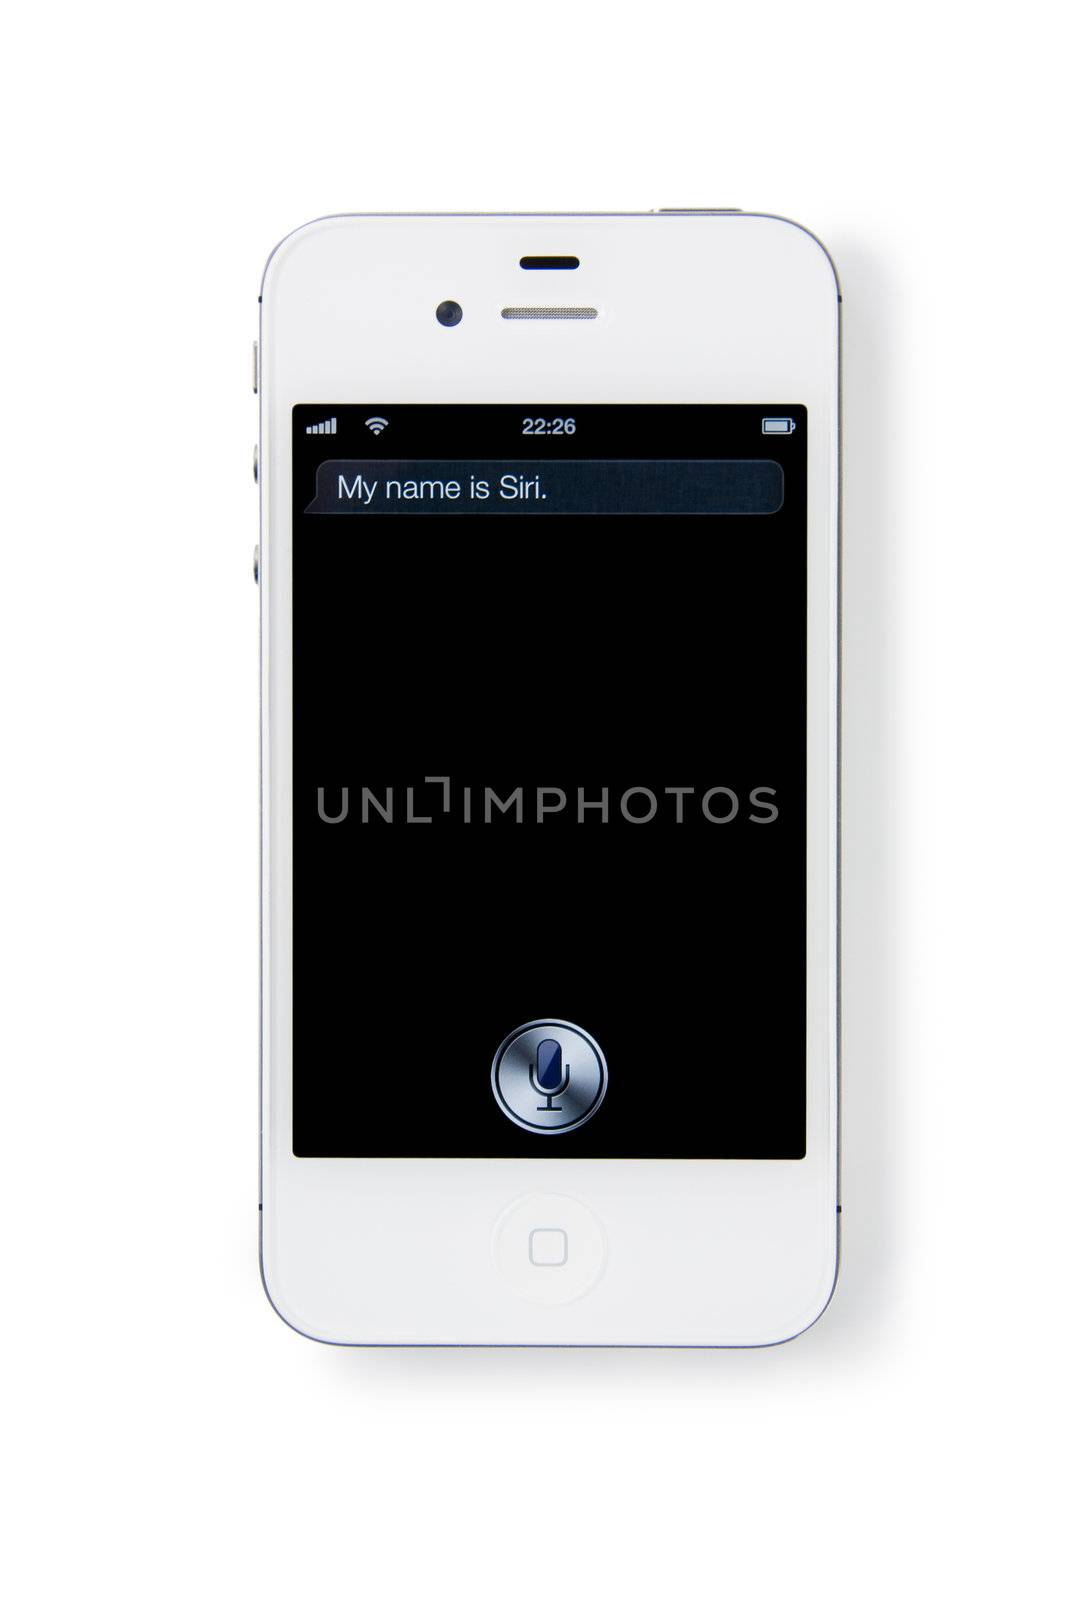 Using SIRI on iPhone 4S by dutourdumonde